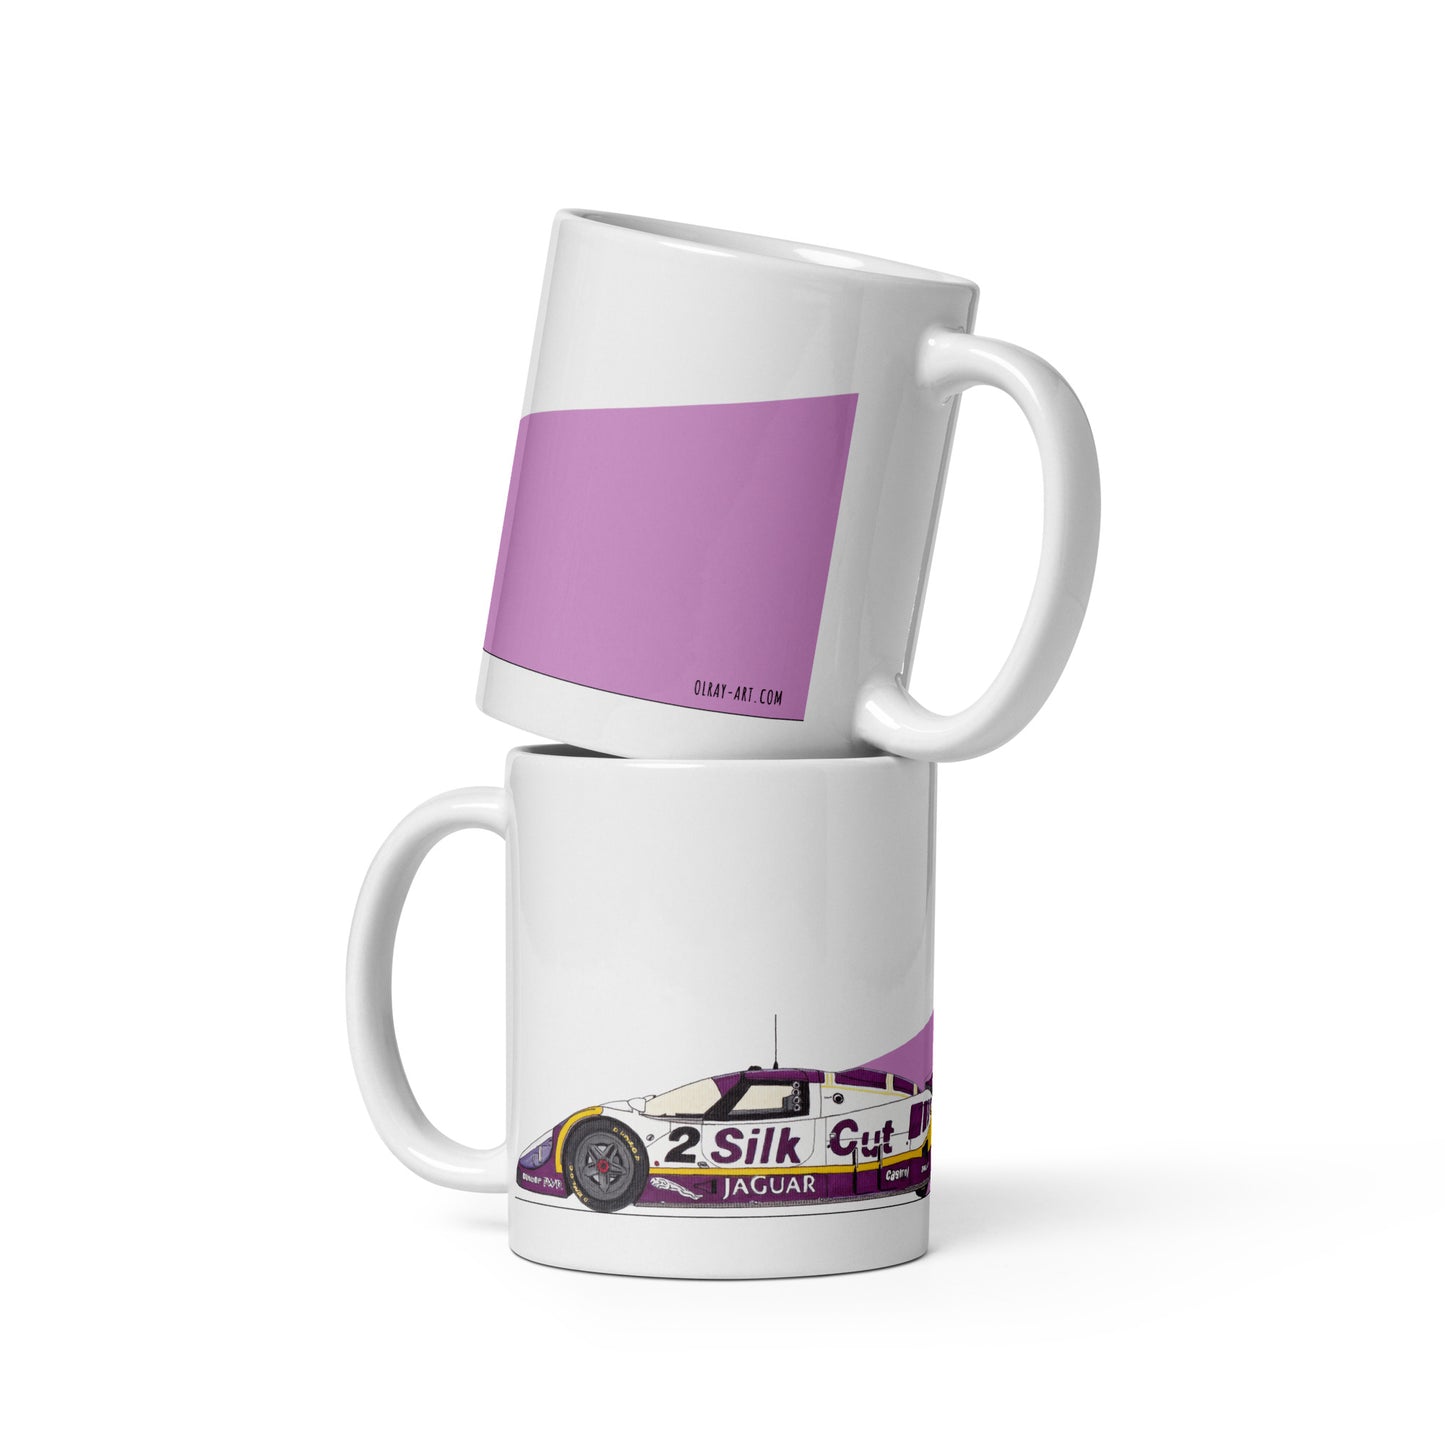 White and purple Jaguar race mug